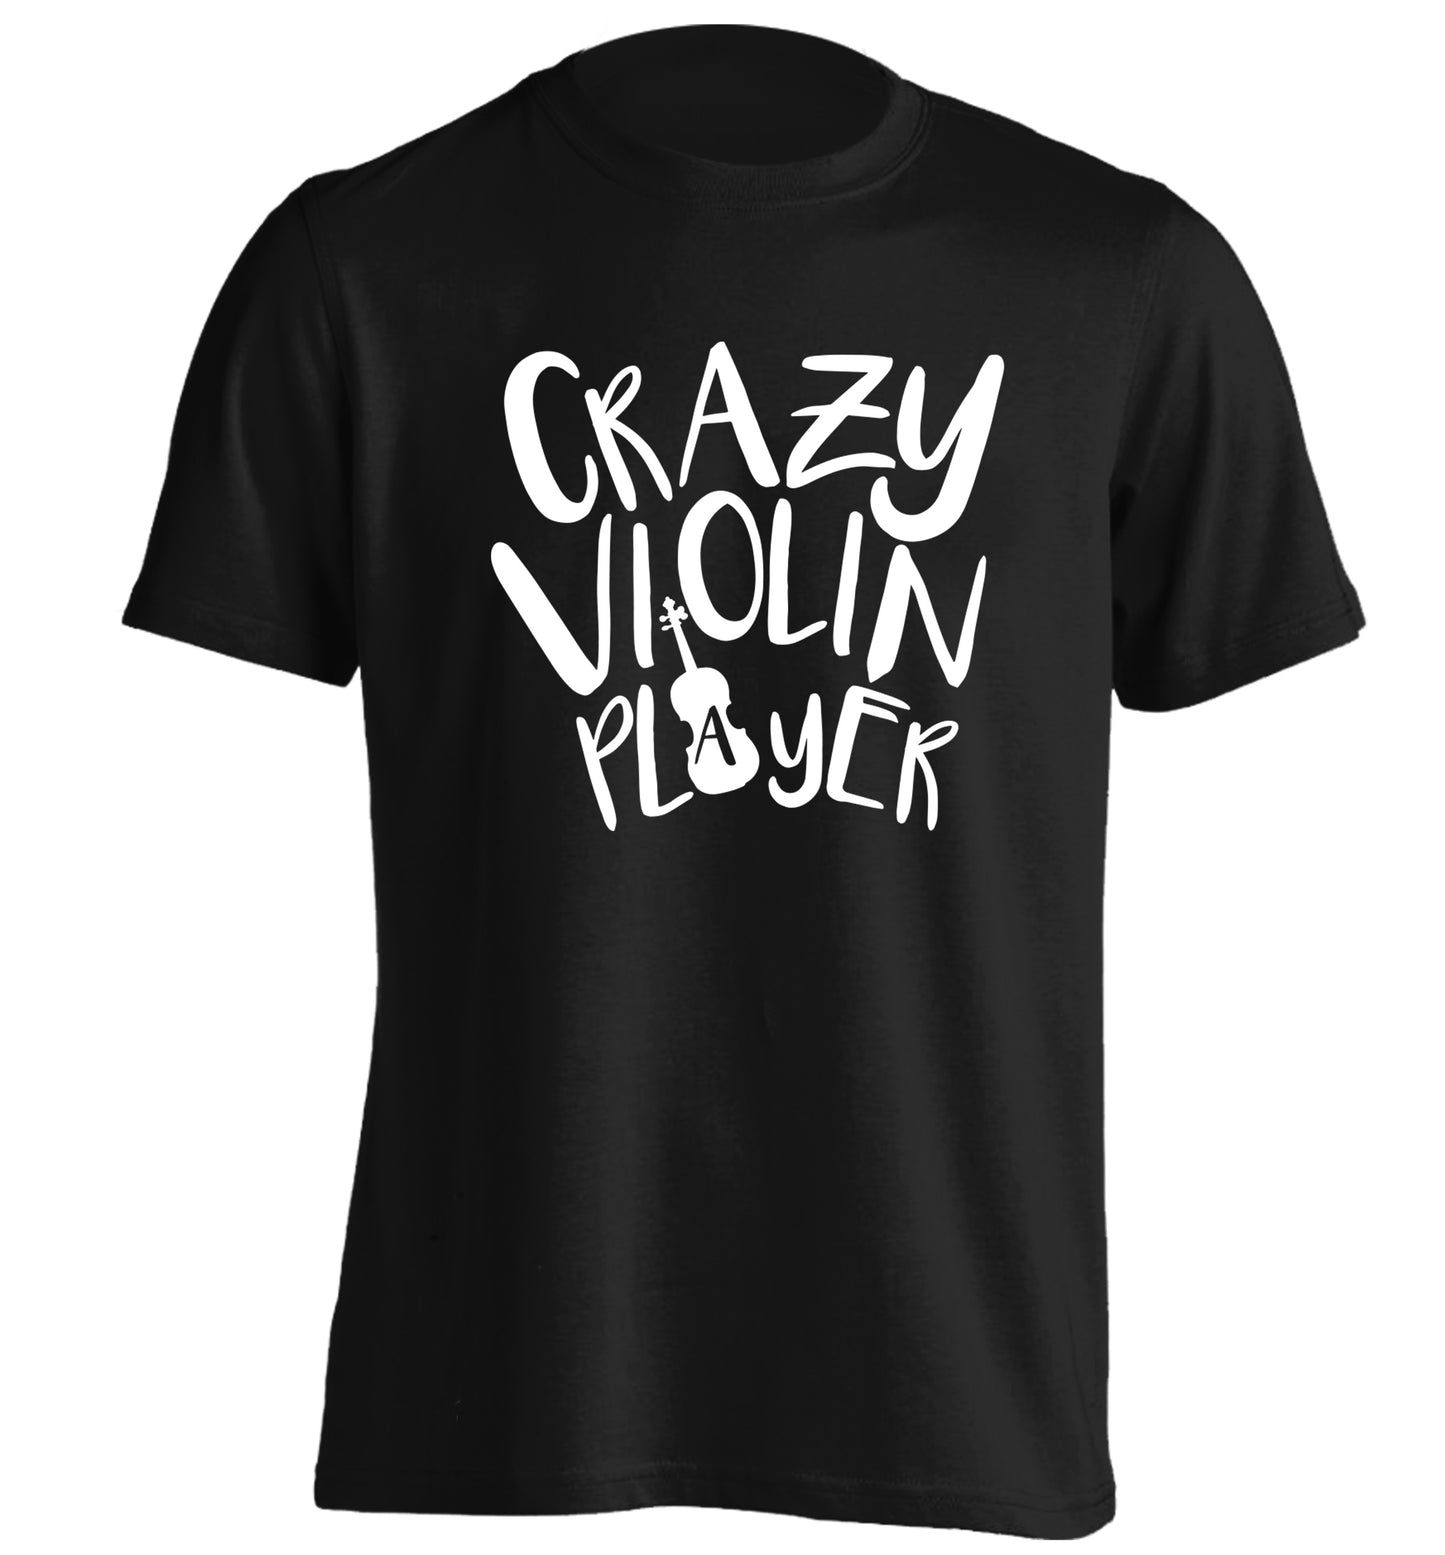 Crazy Violin Player adults unisex black Tshirt 2XL